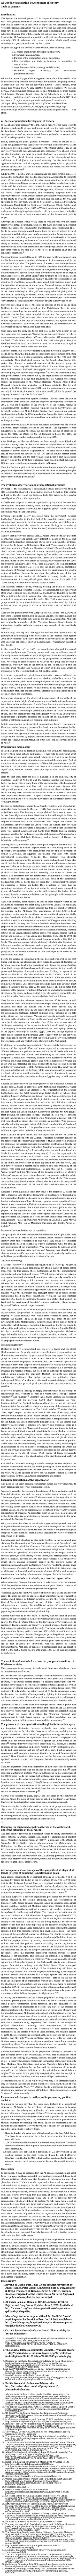 Al-Qaeda organization development of history